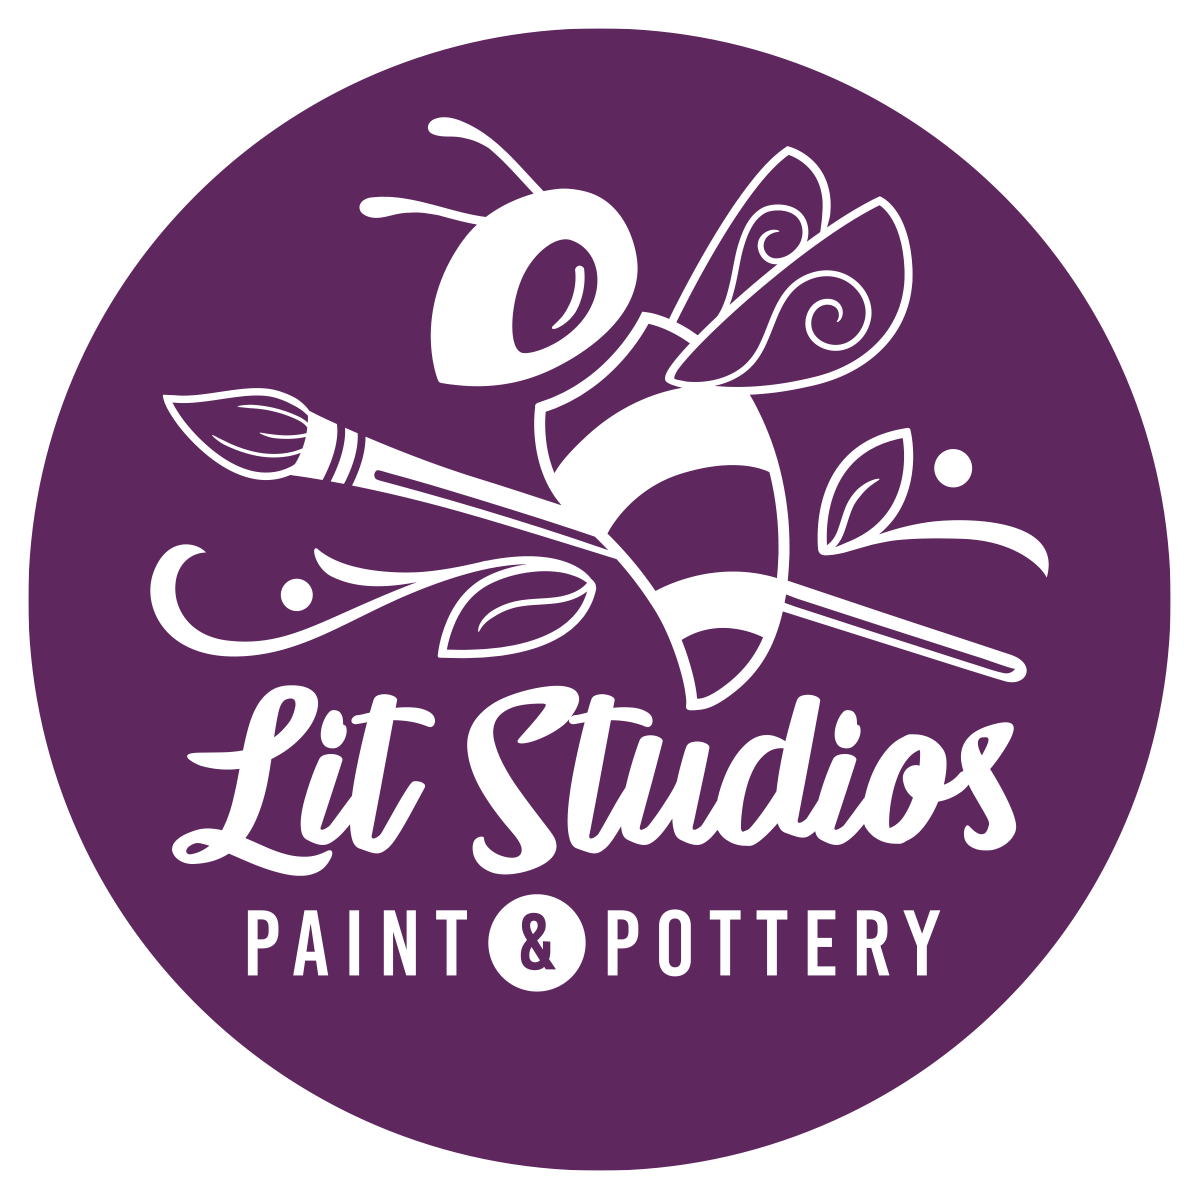 Lit Studios Paint and Pottery